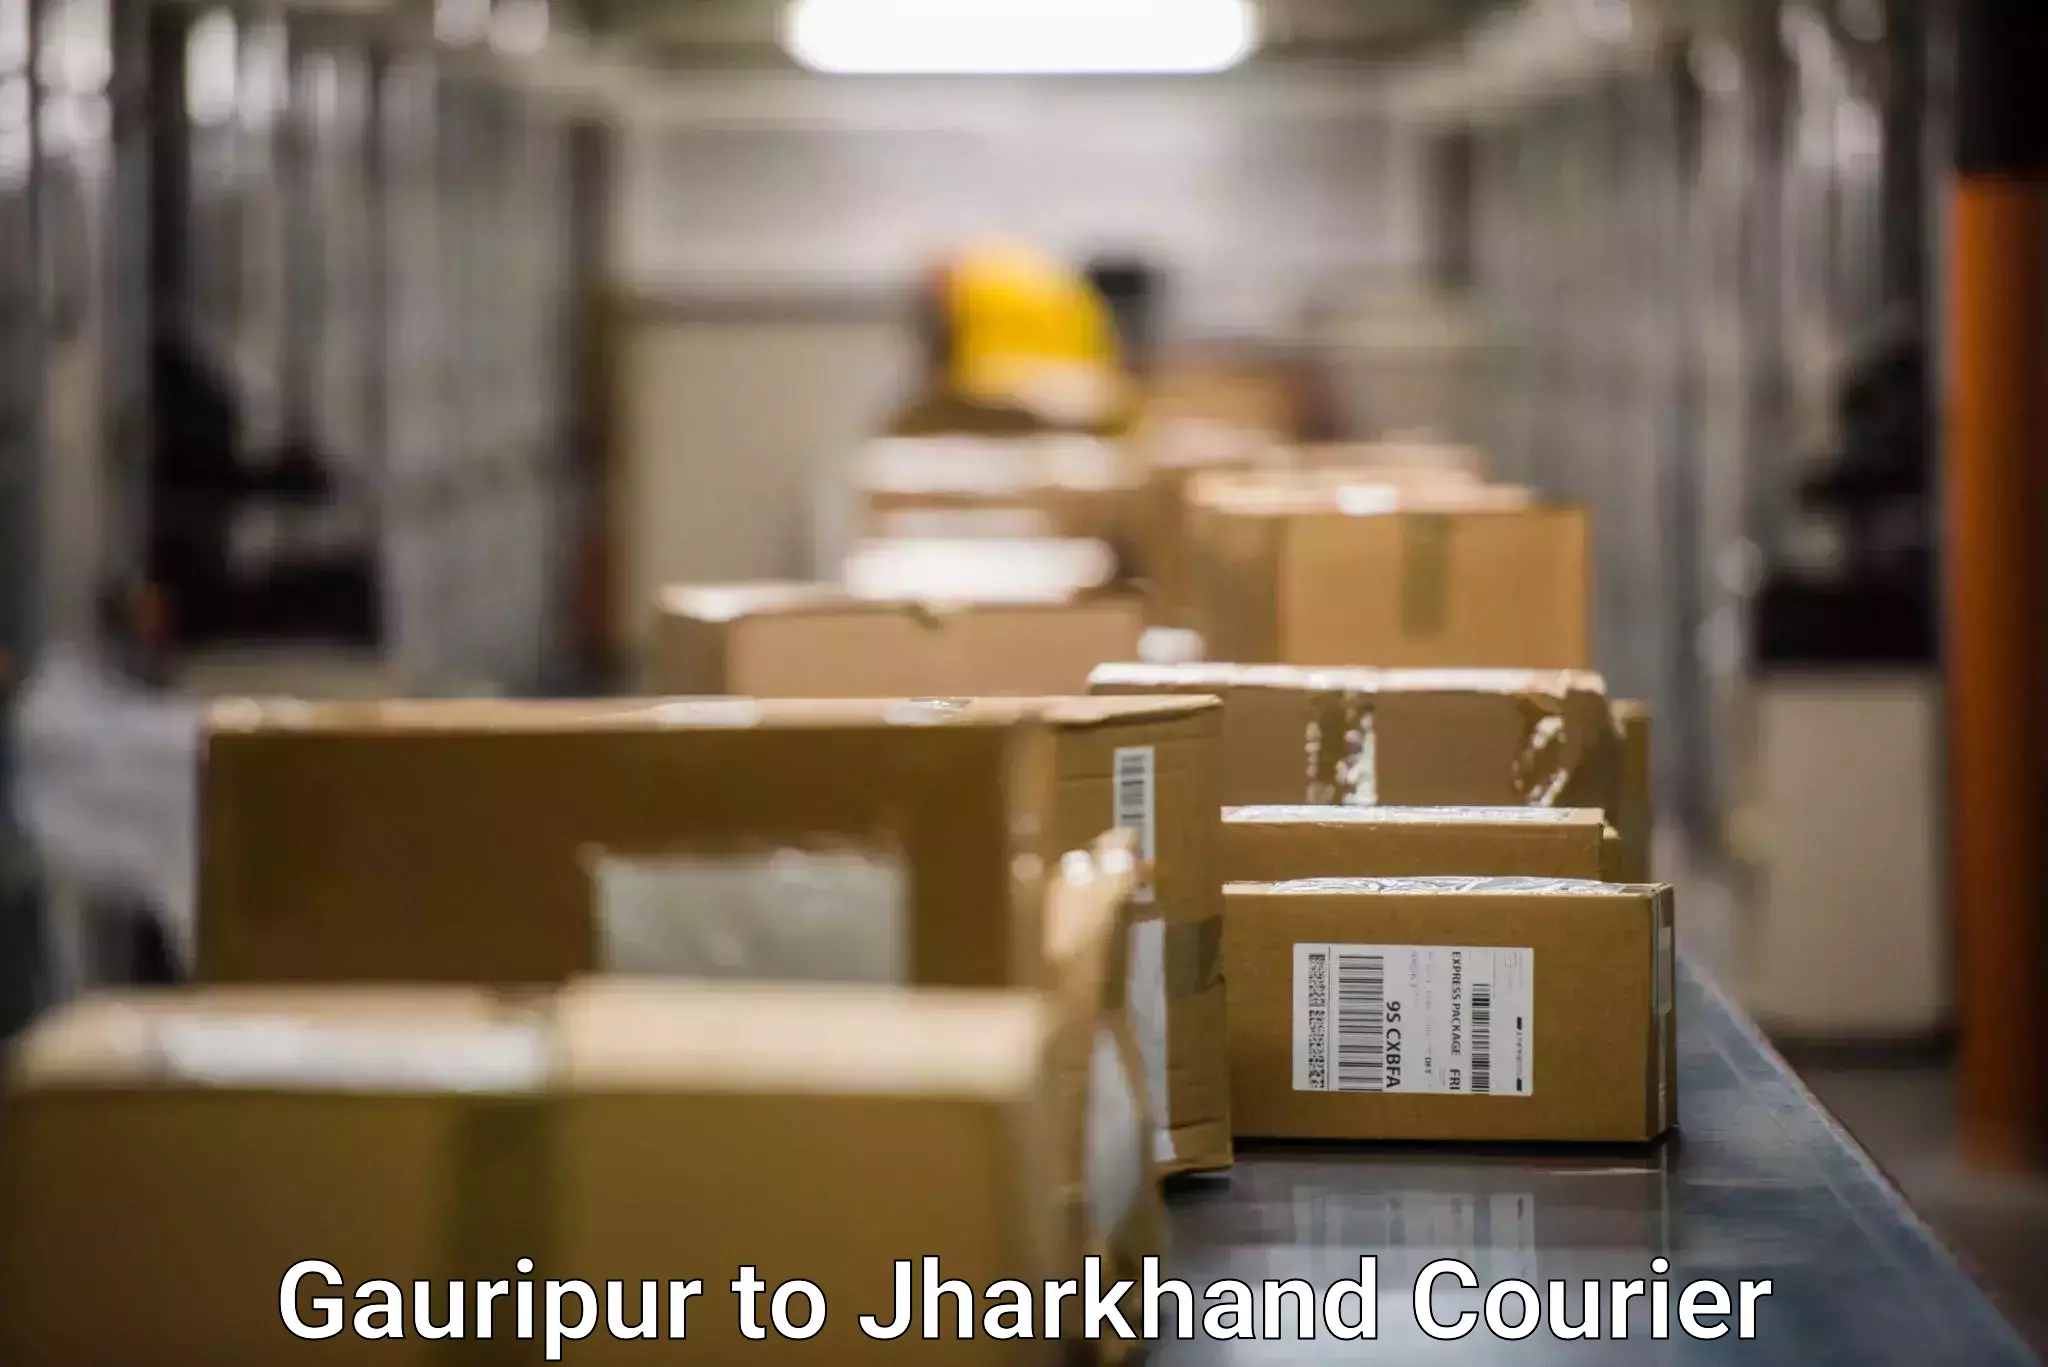 Global shipping networks Gauripur to Rangalia